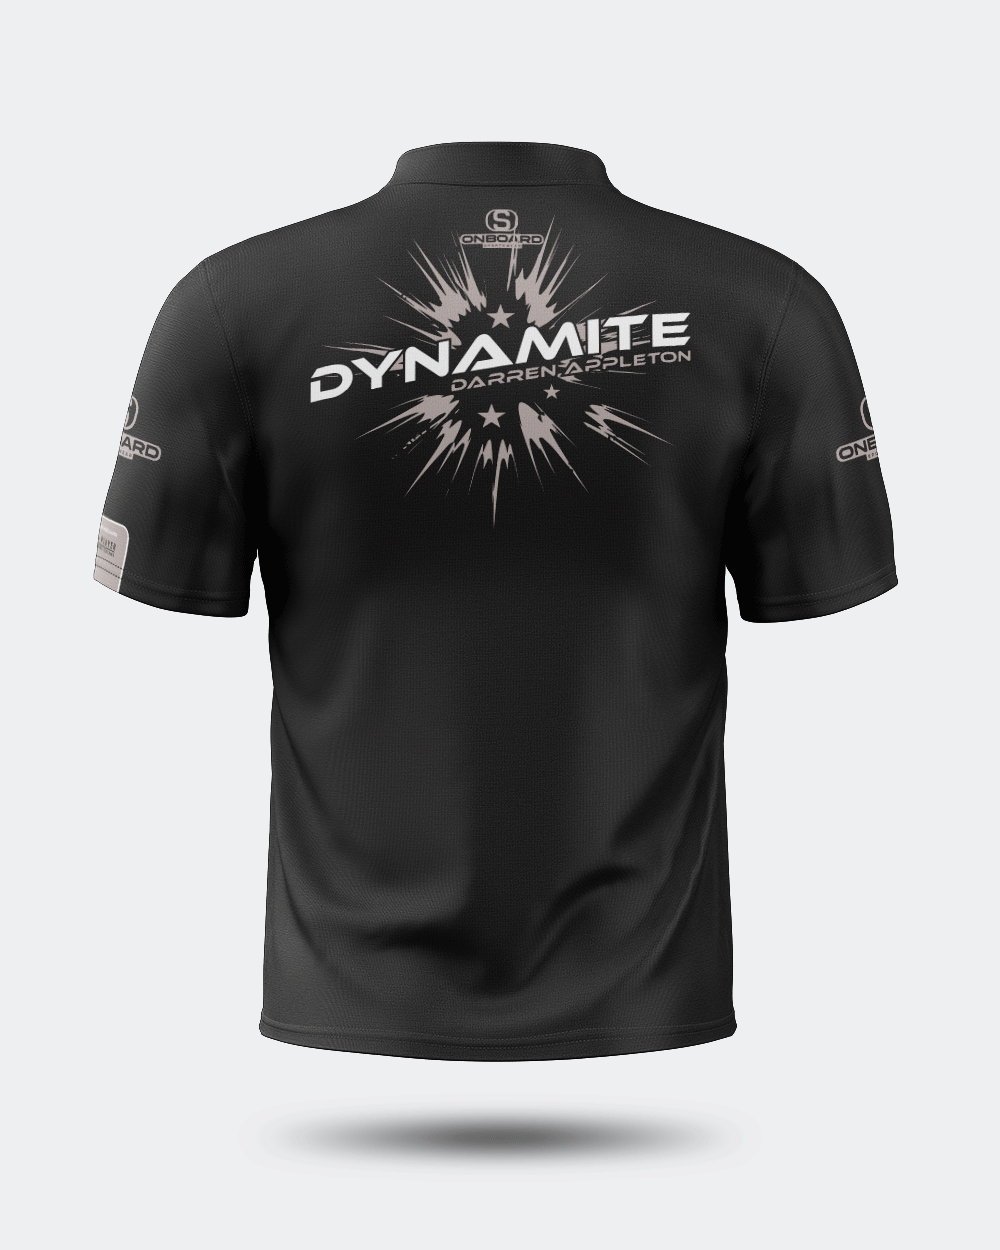 Dynamite Jersey